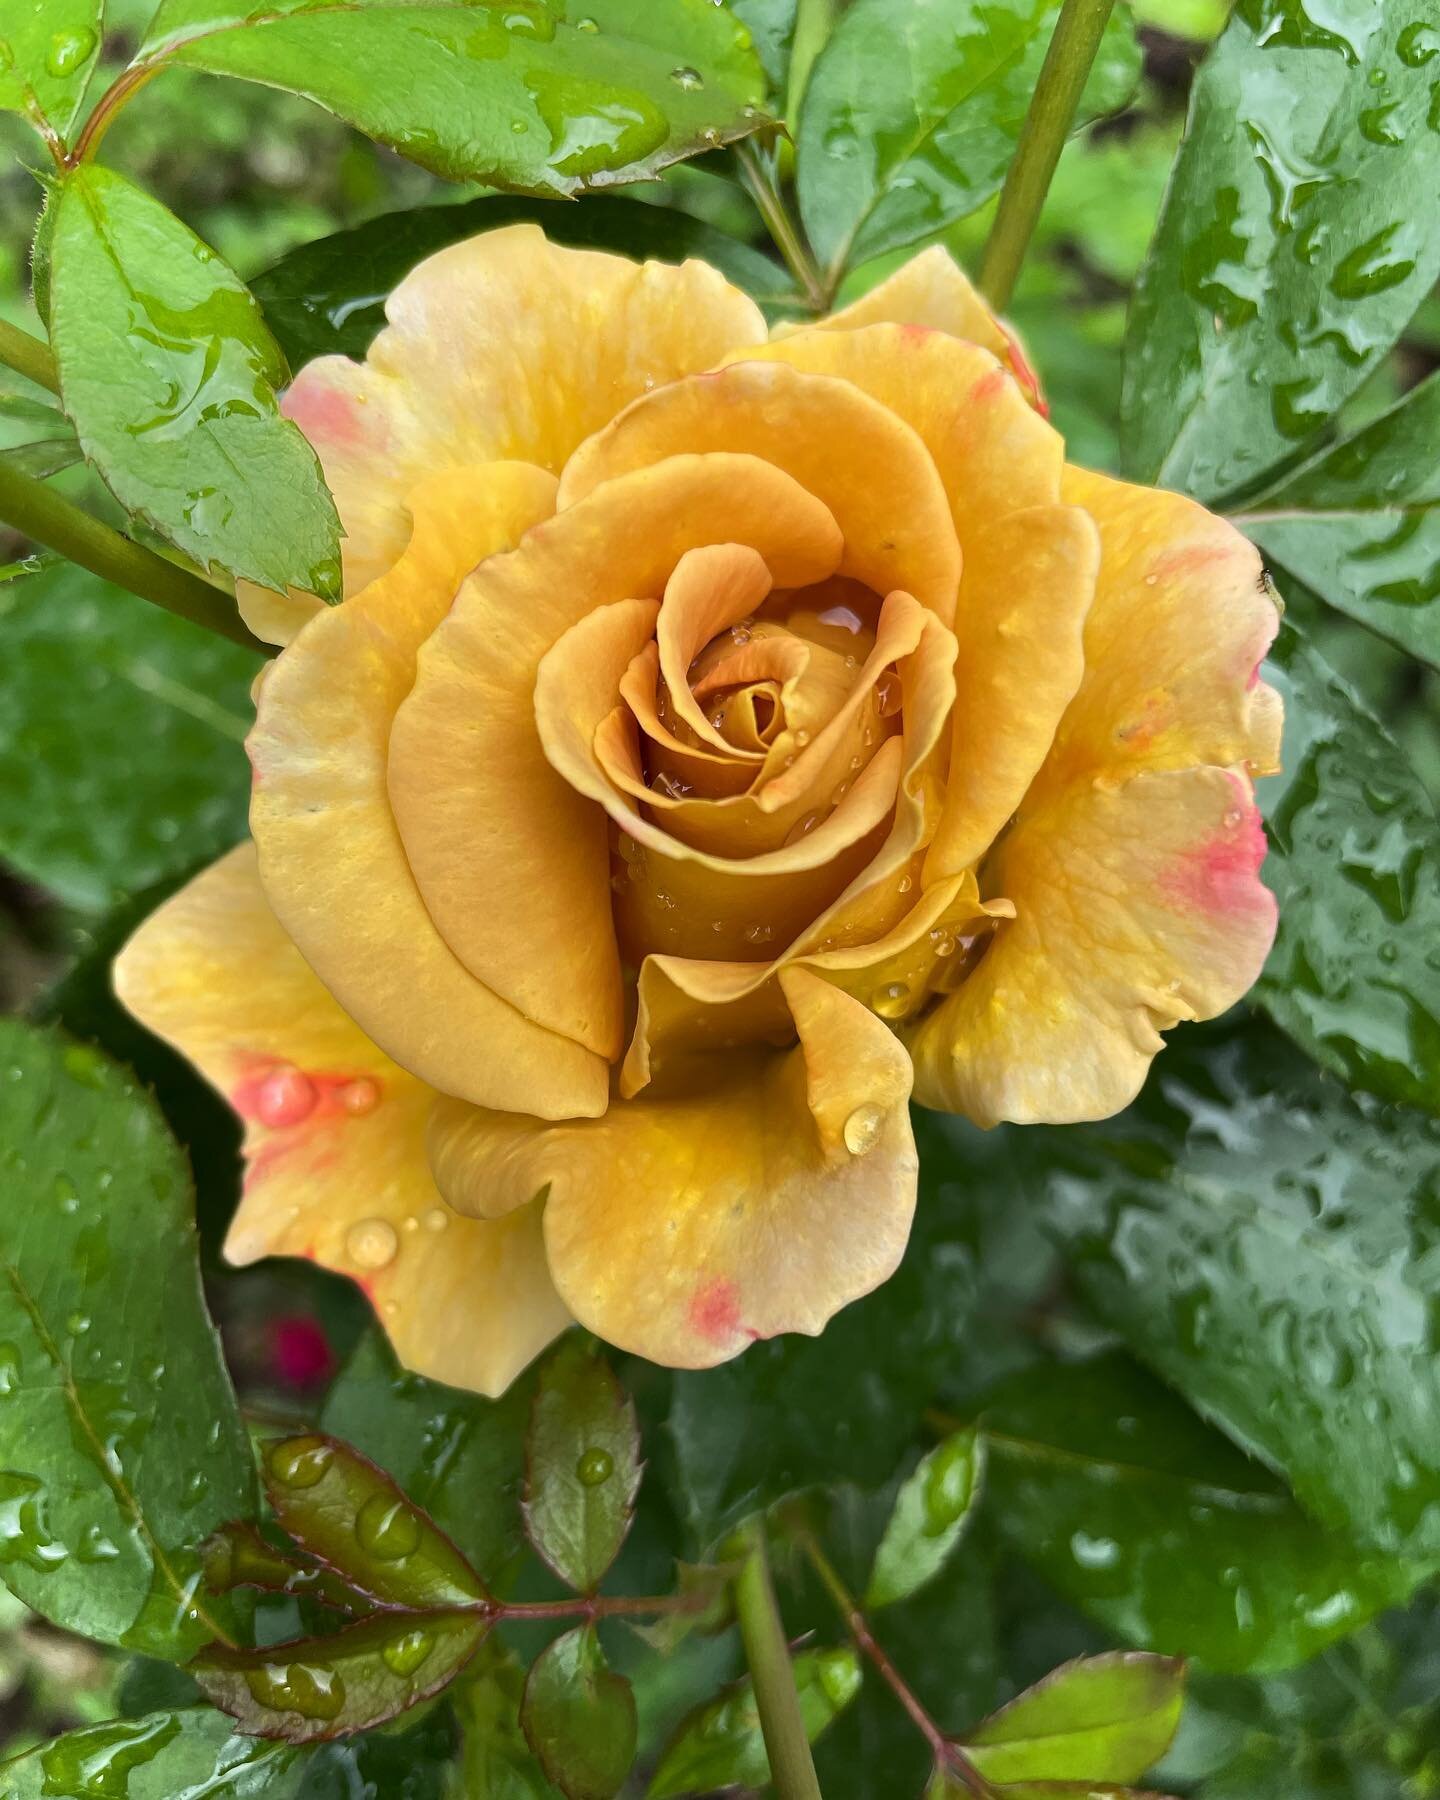 The Honey Dijon Rose has come into flower. Just beautiful! #honeydijonrose #locallygrown #locallygrownflowers